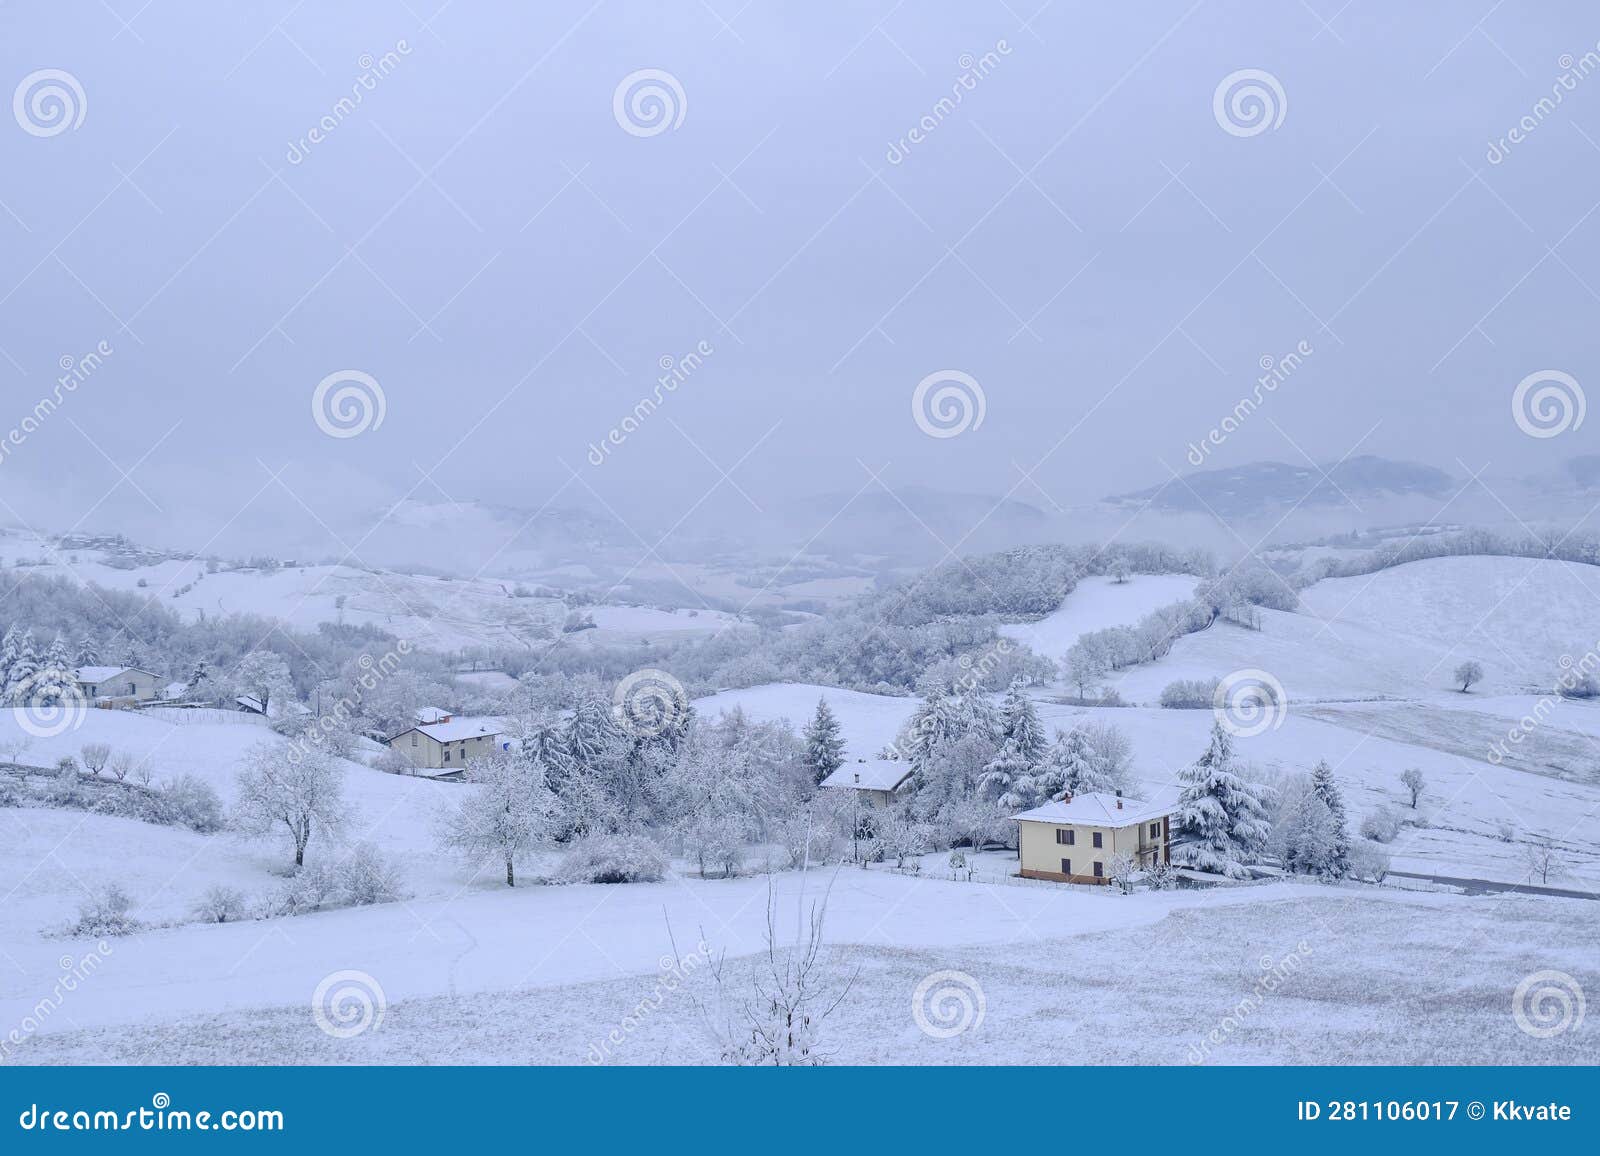 winter landscape. snowy hills, homes, nature, horizon. natural background. appennino tosco-emiliano national park